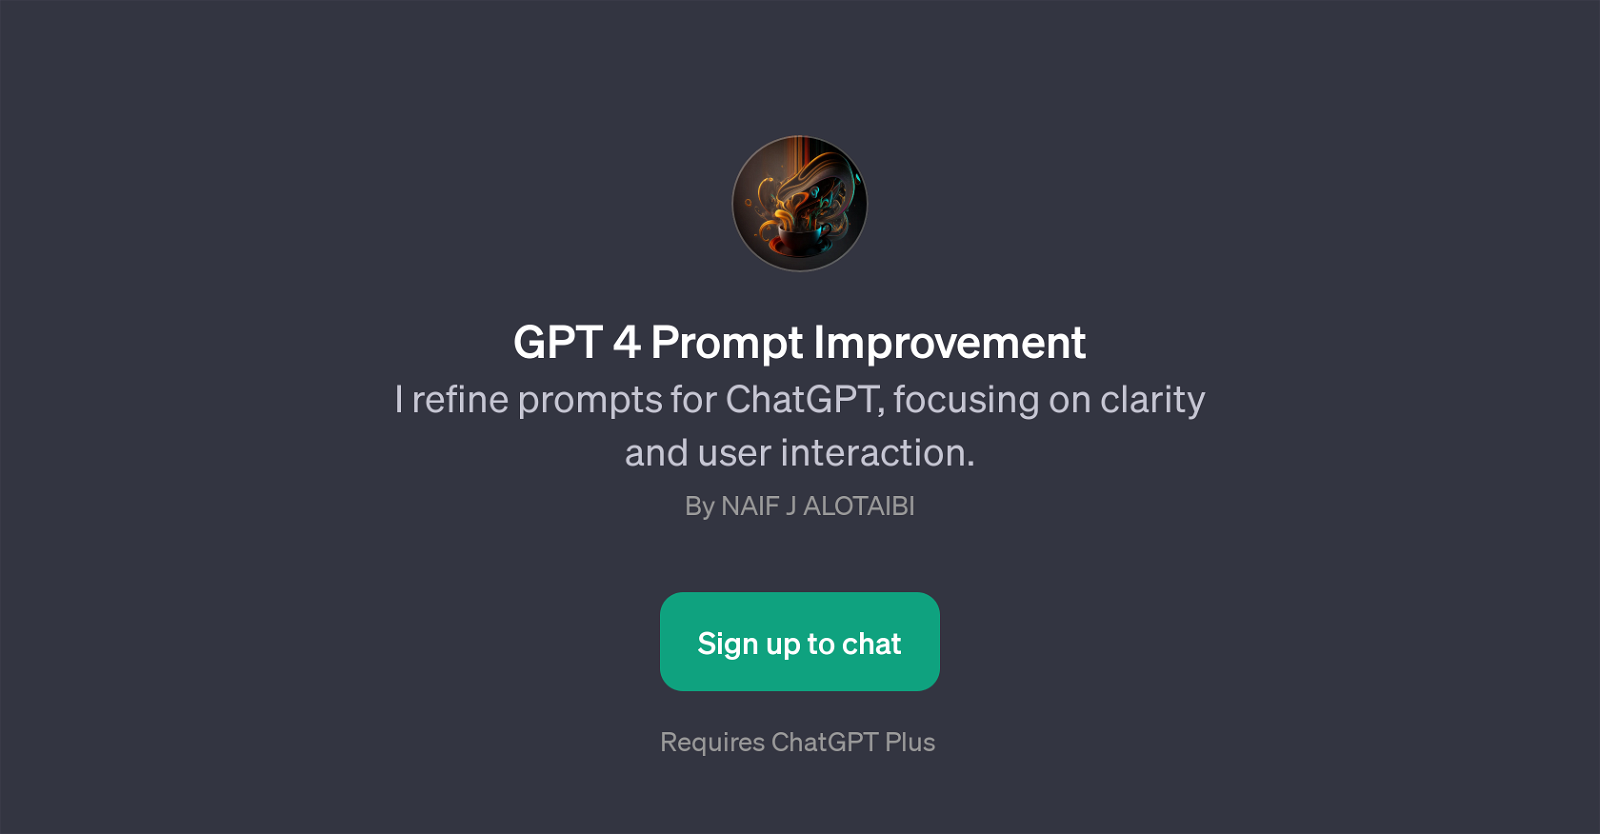 GPT 4 Prompt Improvement website